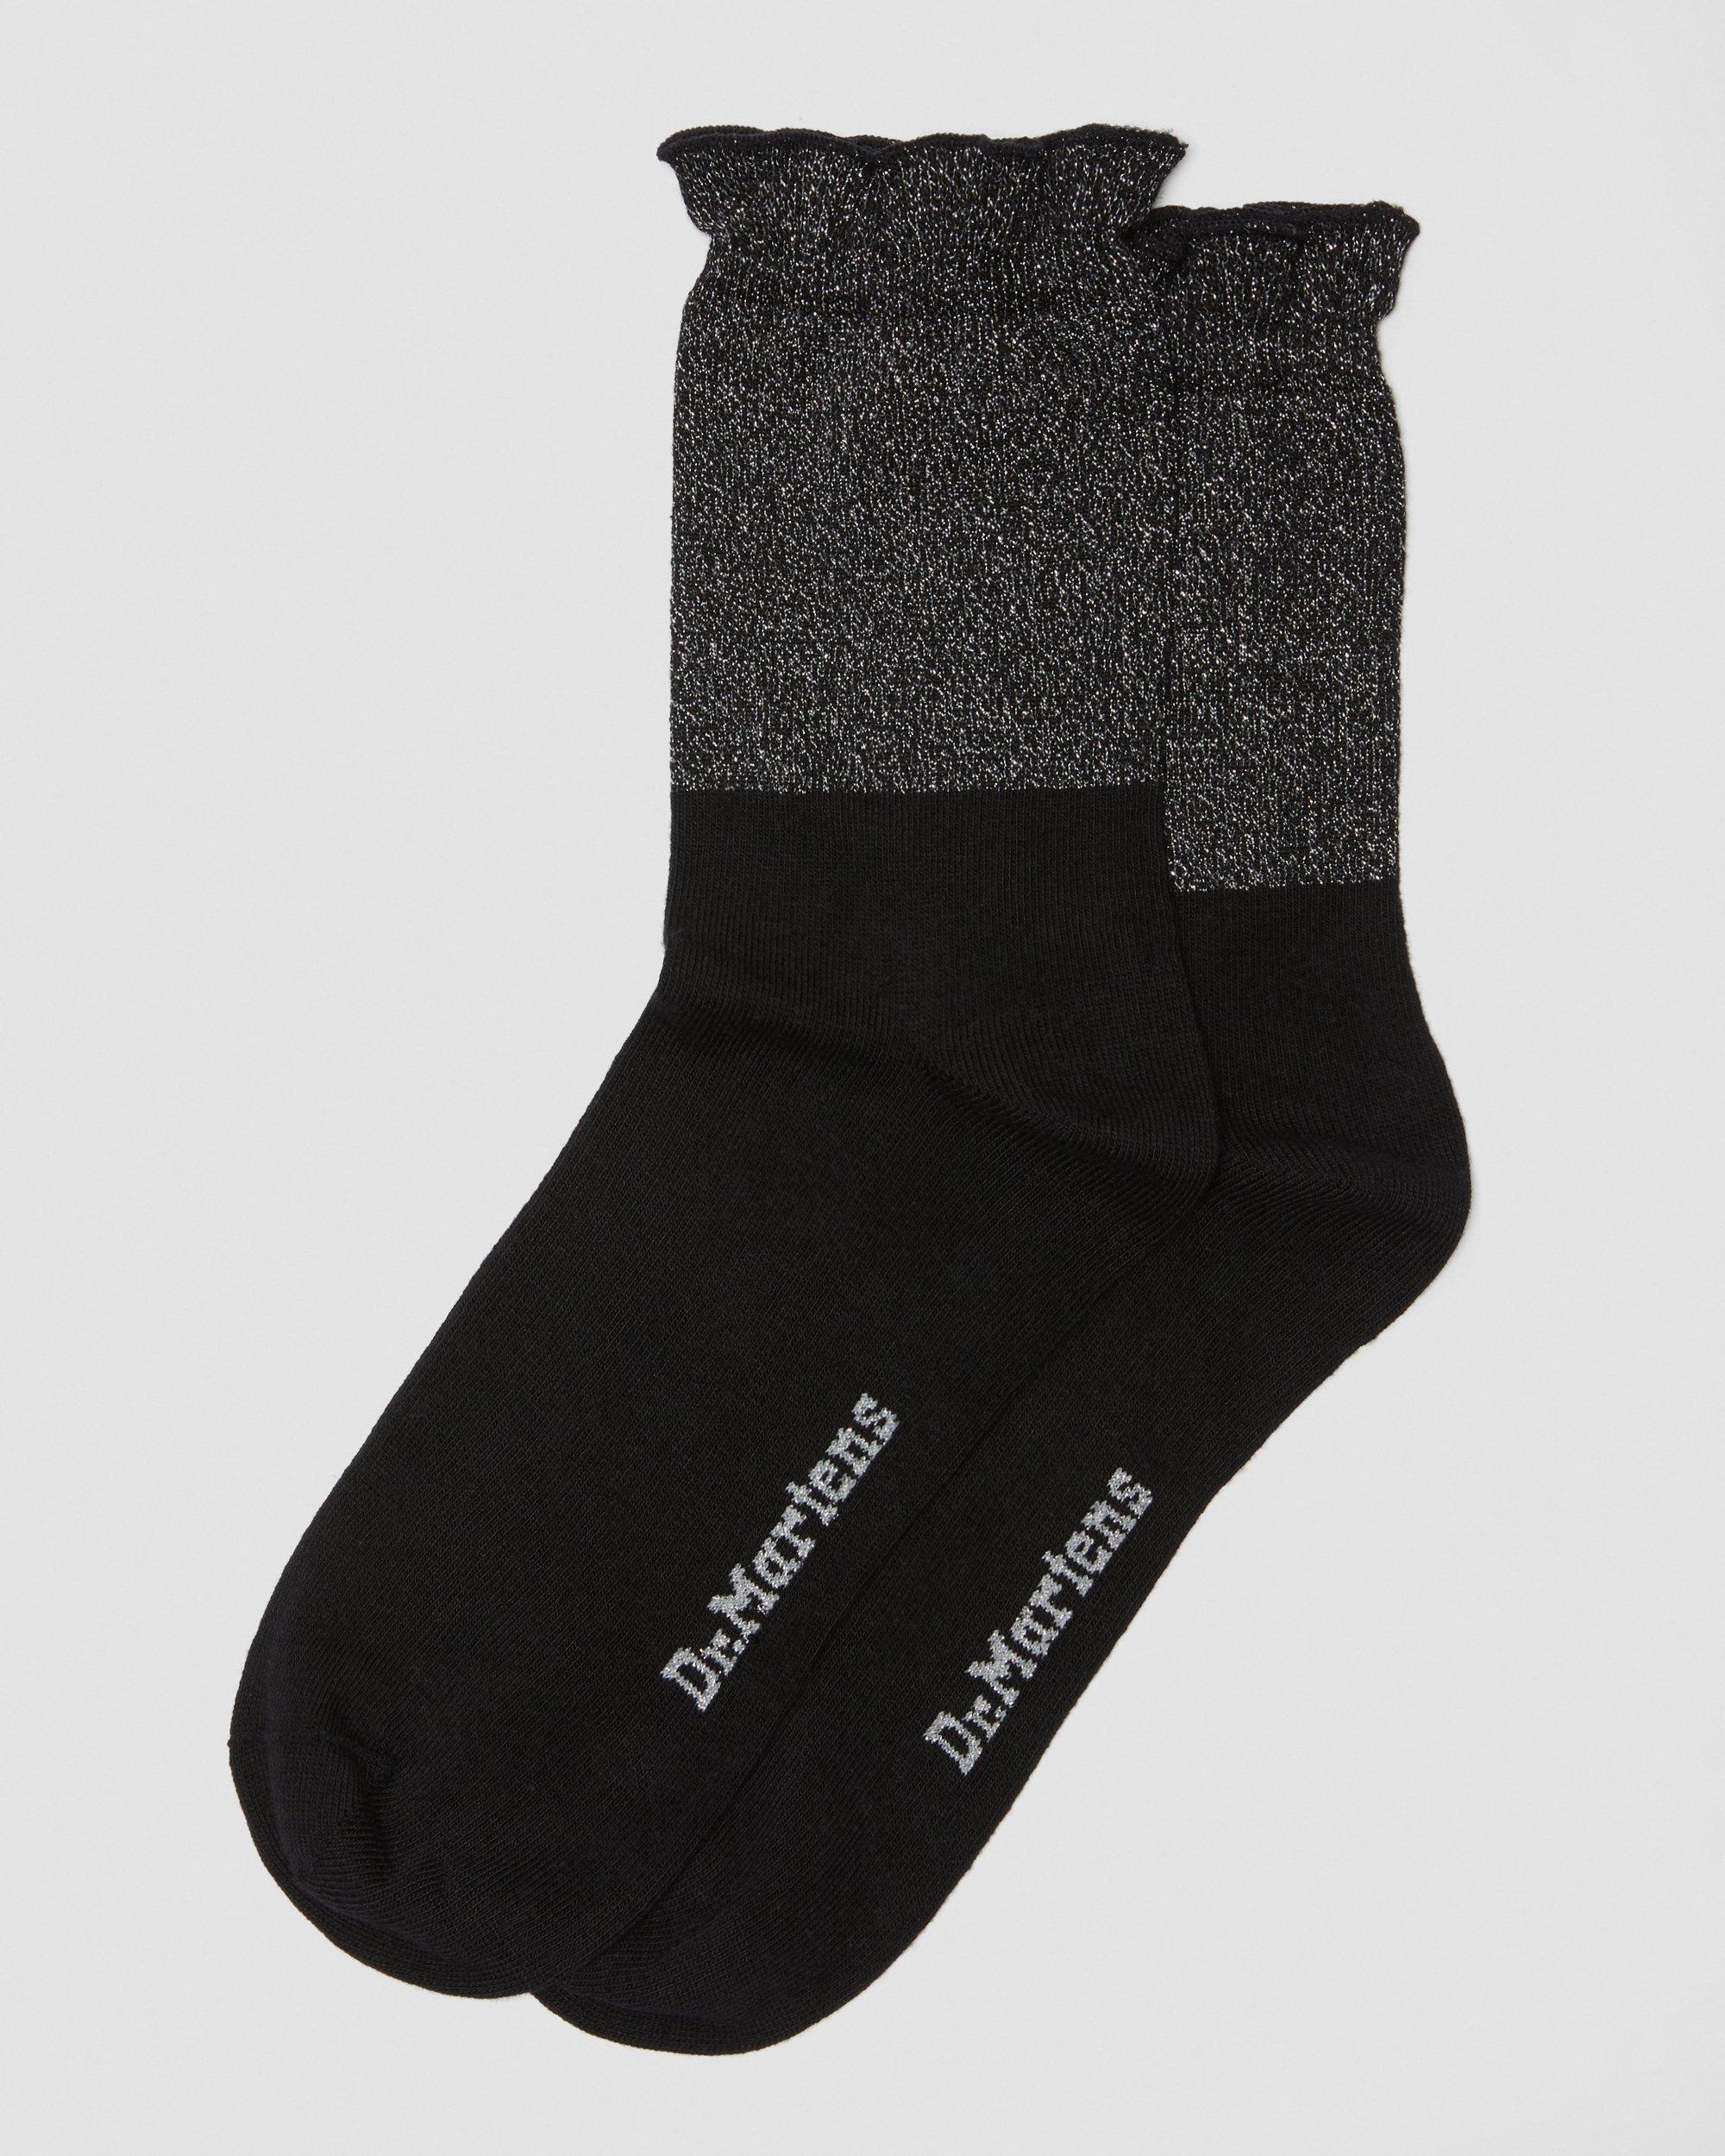 Iridescent Socks in Sort